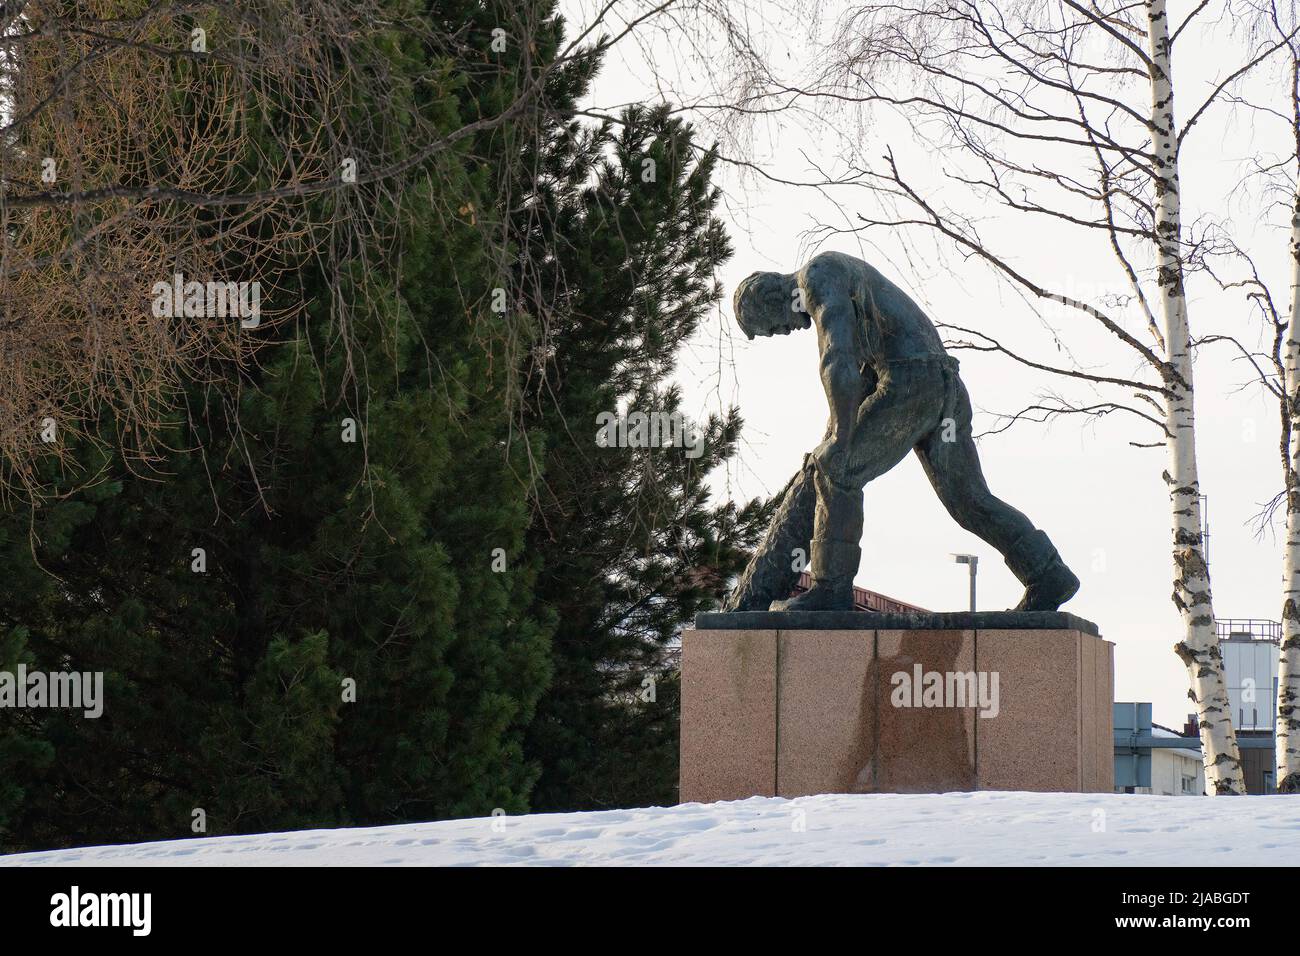 Rovaniemi, Finland - March 20th, 2022: A Bronze statue of a lumberjack debarking a log, on a snowy day in Rovaniemi, Finland. Stock Photo